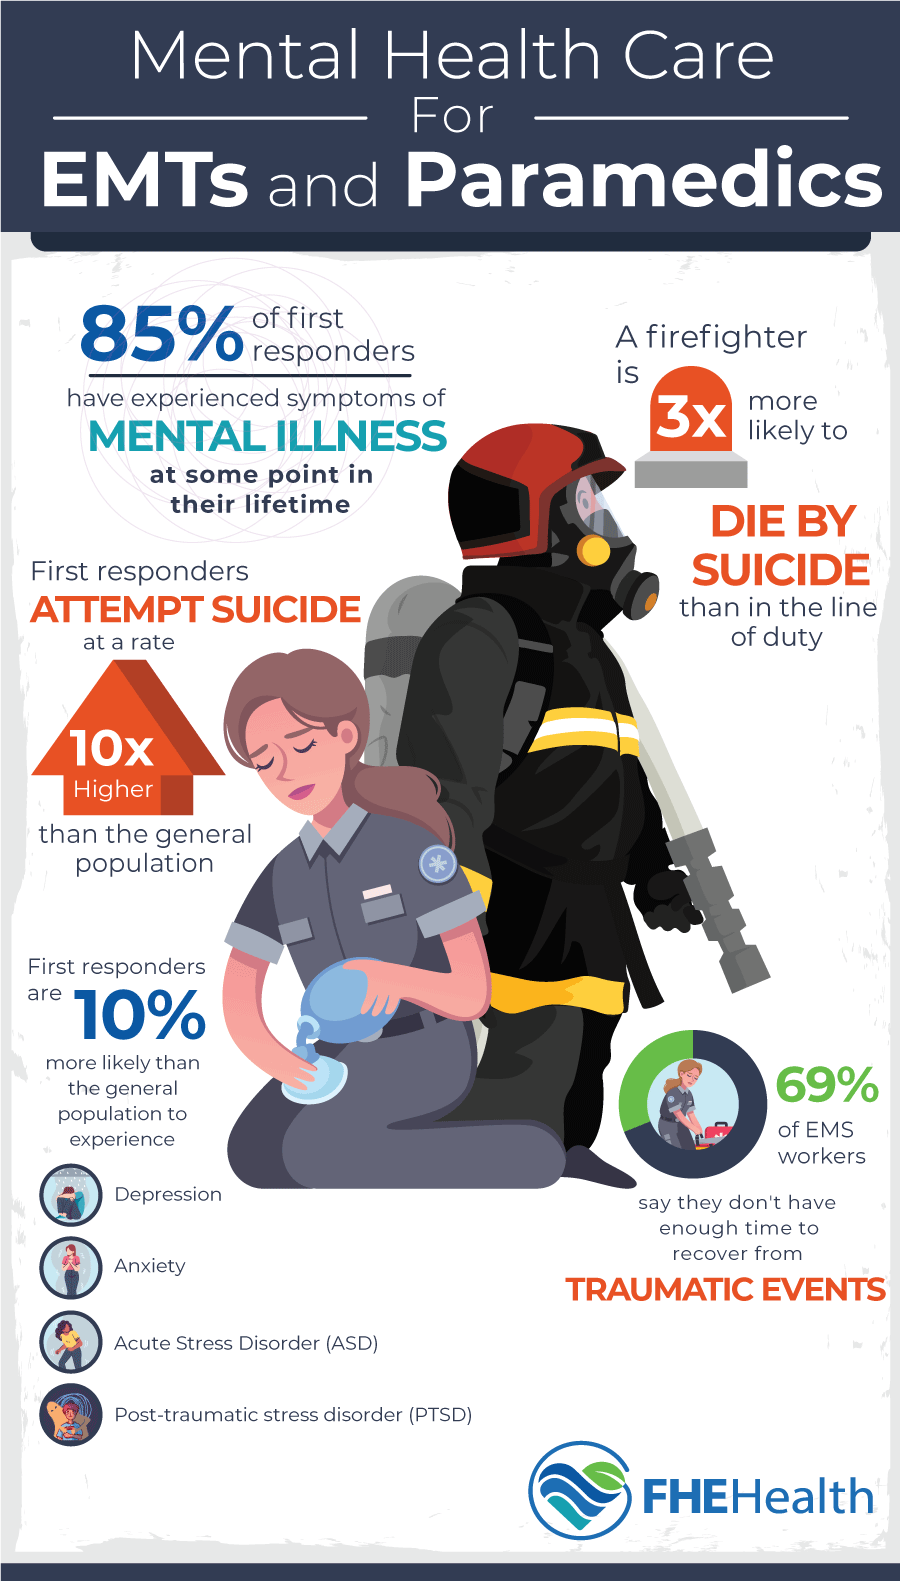 Mental Health Care for EMTs and Paramedics